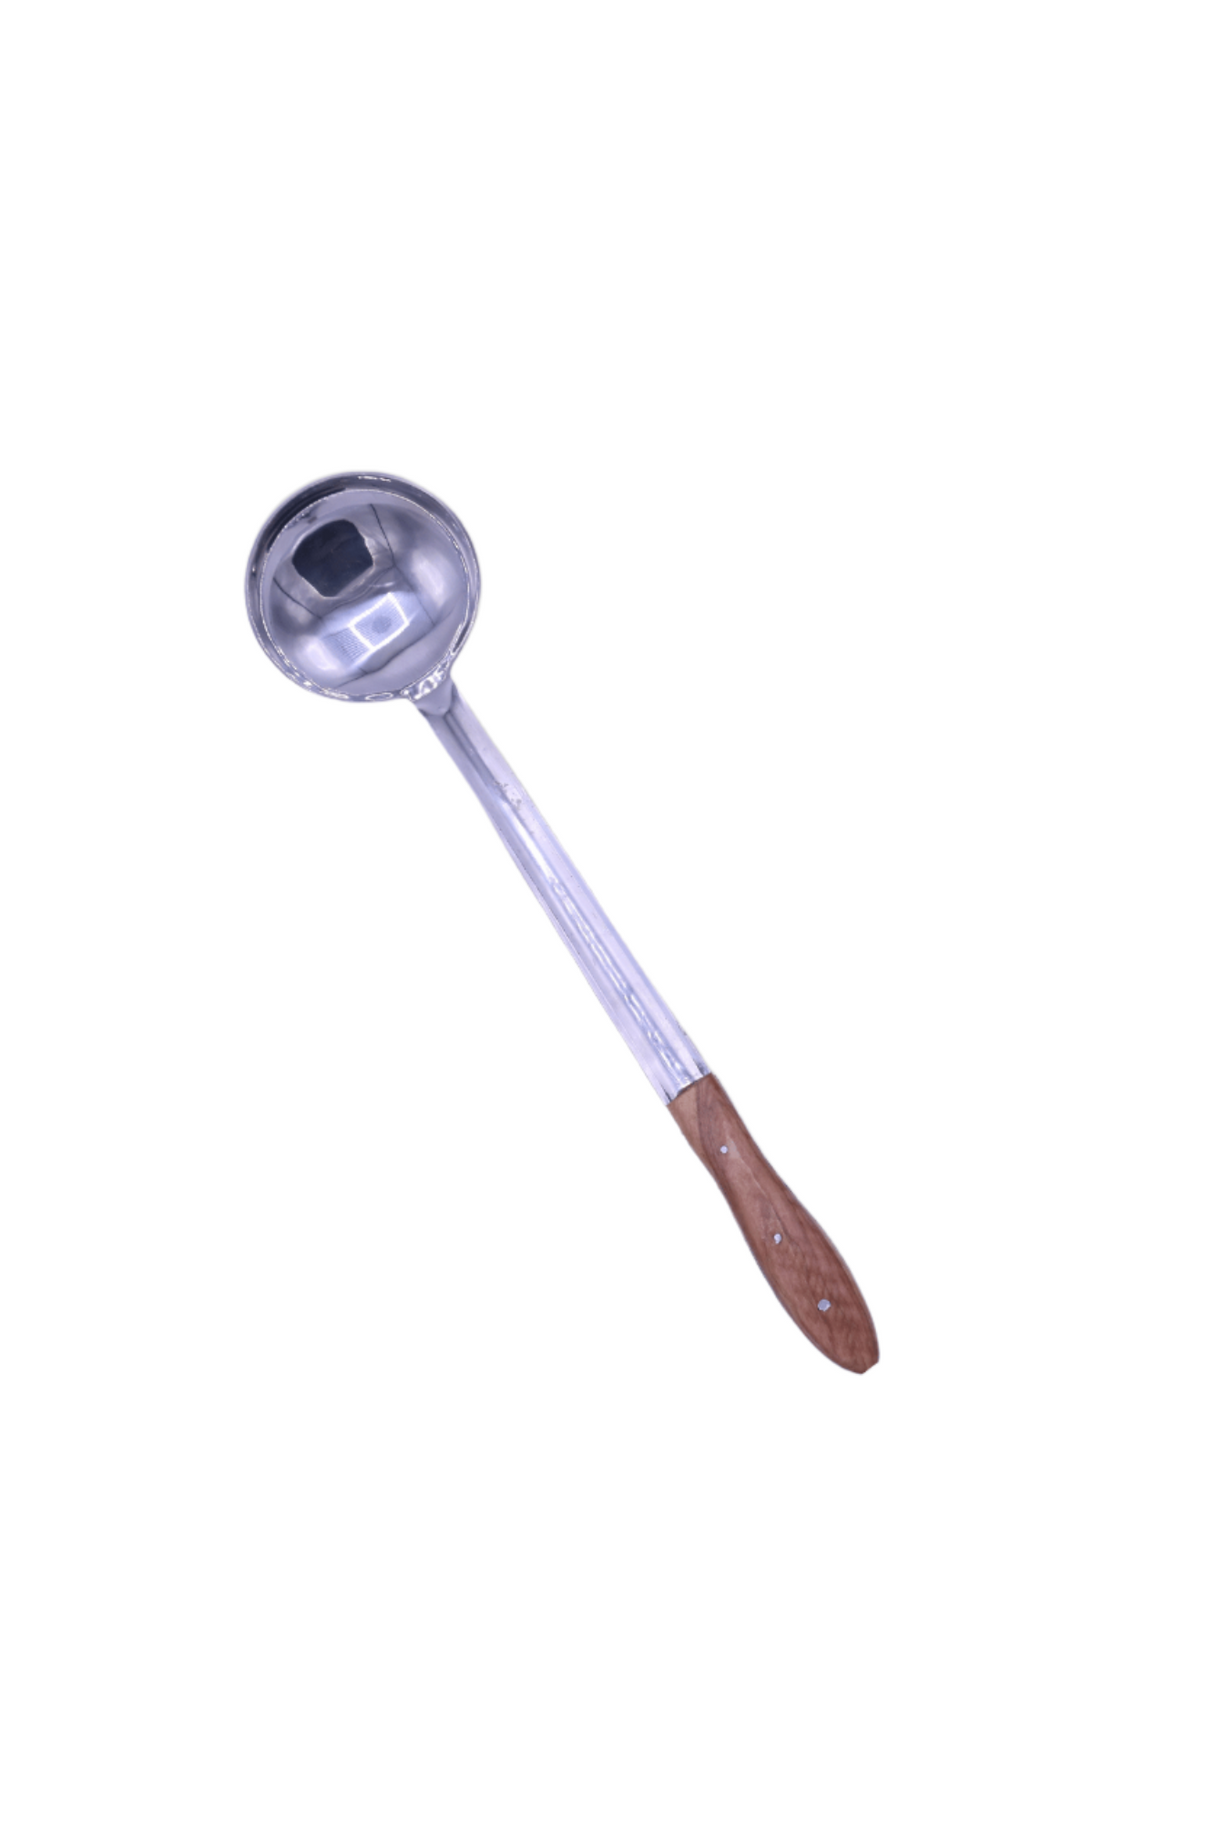 ss broth spoon wood handle 12''